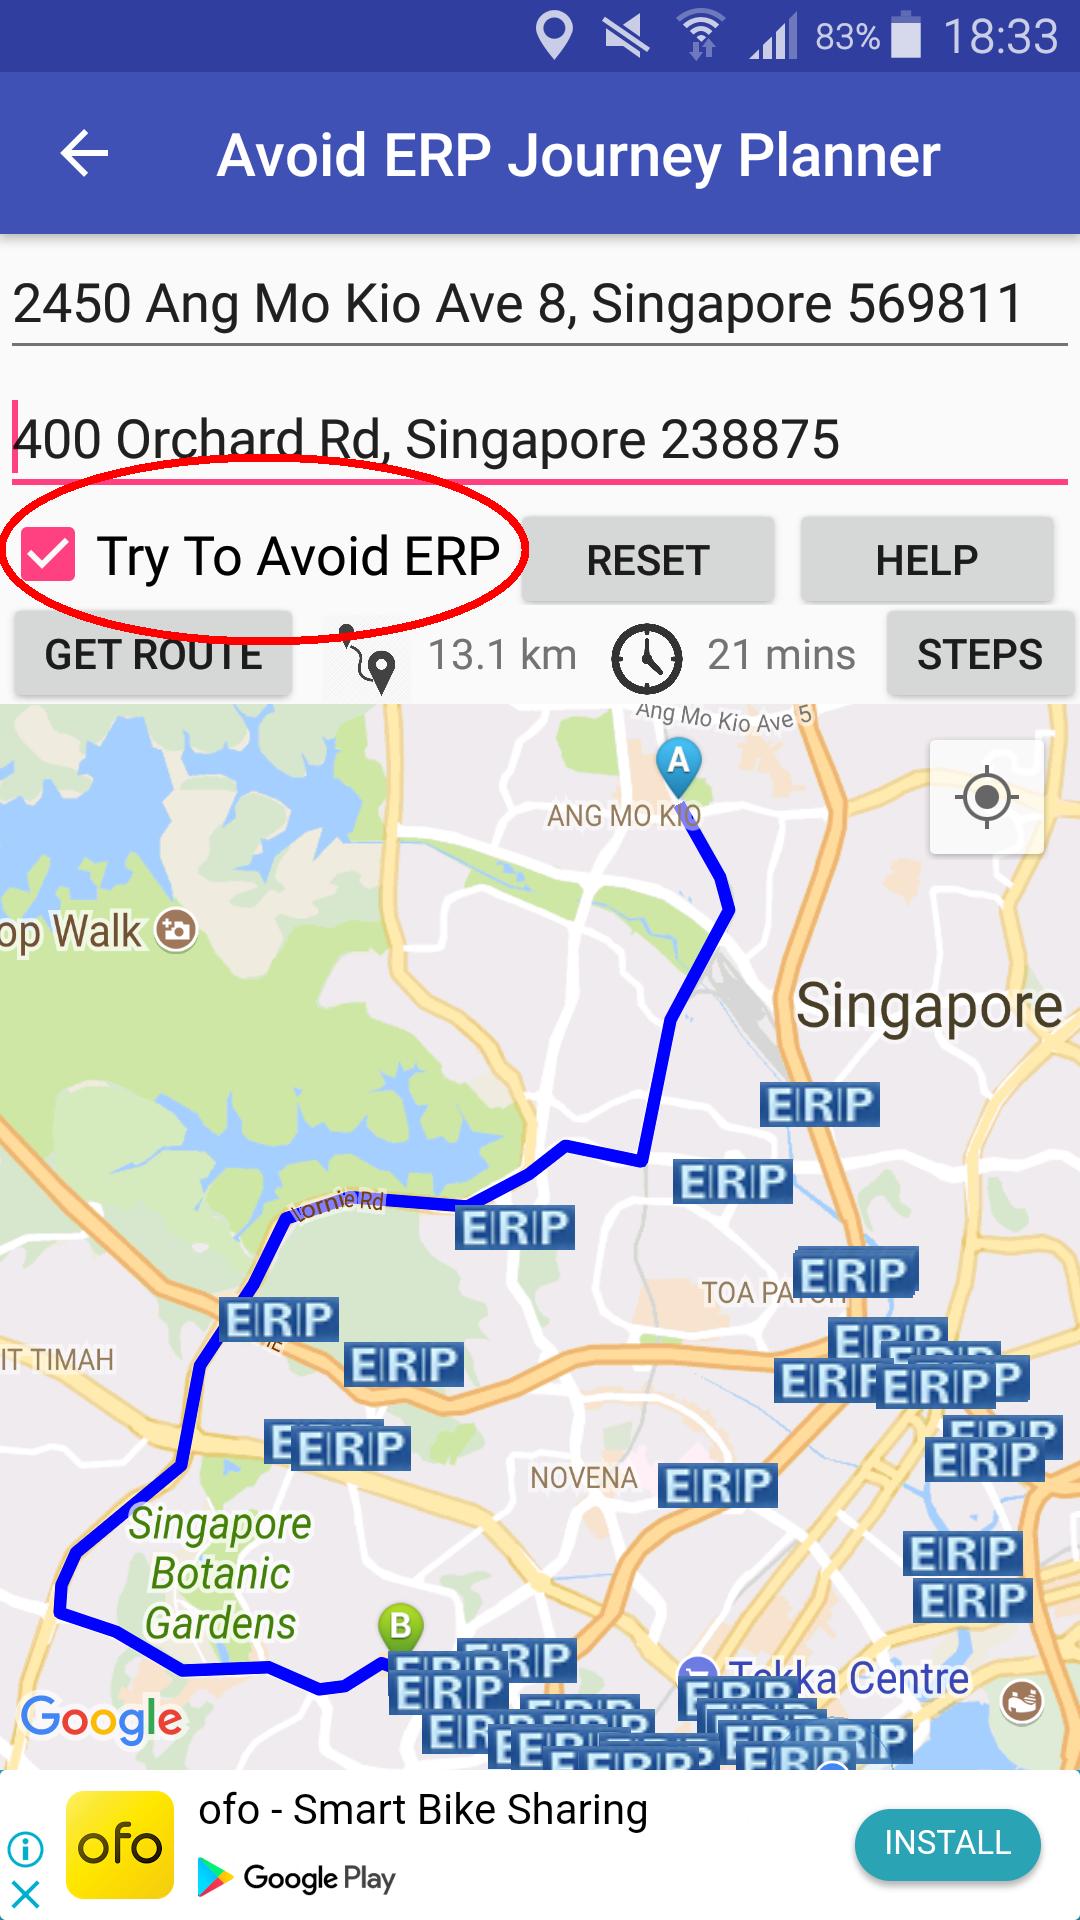 Singapore EPR. Journey planning